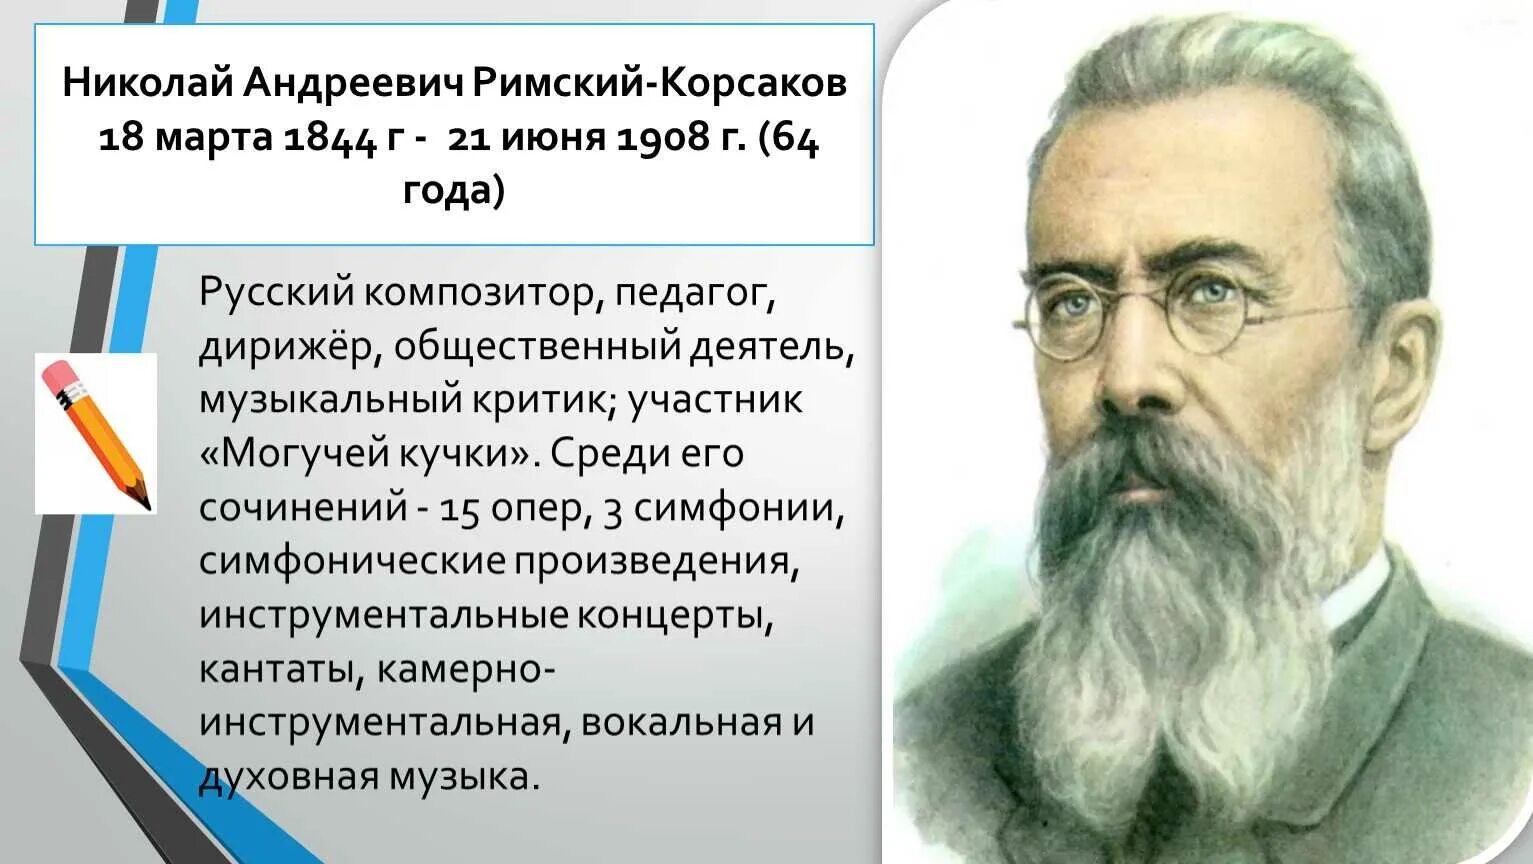 Н.А.Римский-Корсаков (1844-1908). Произведения николая андреевича